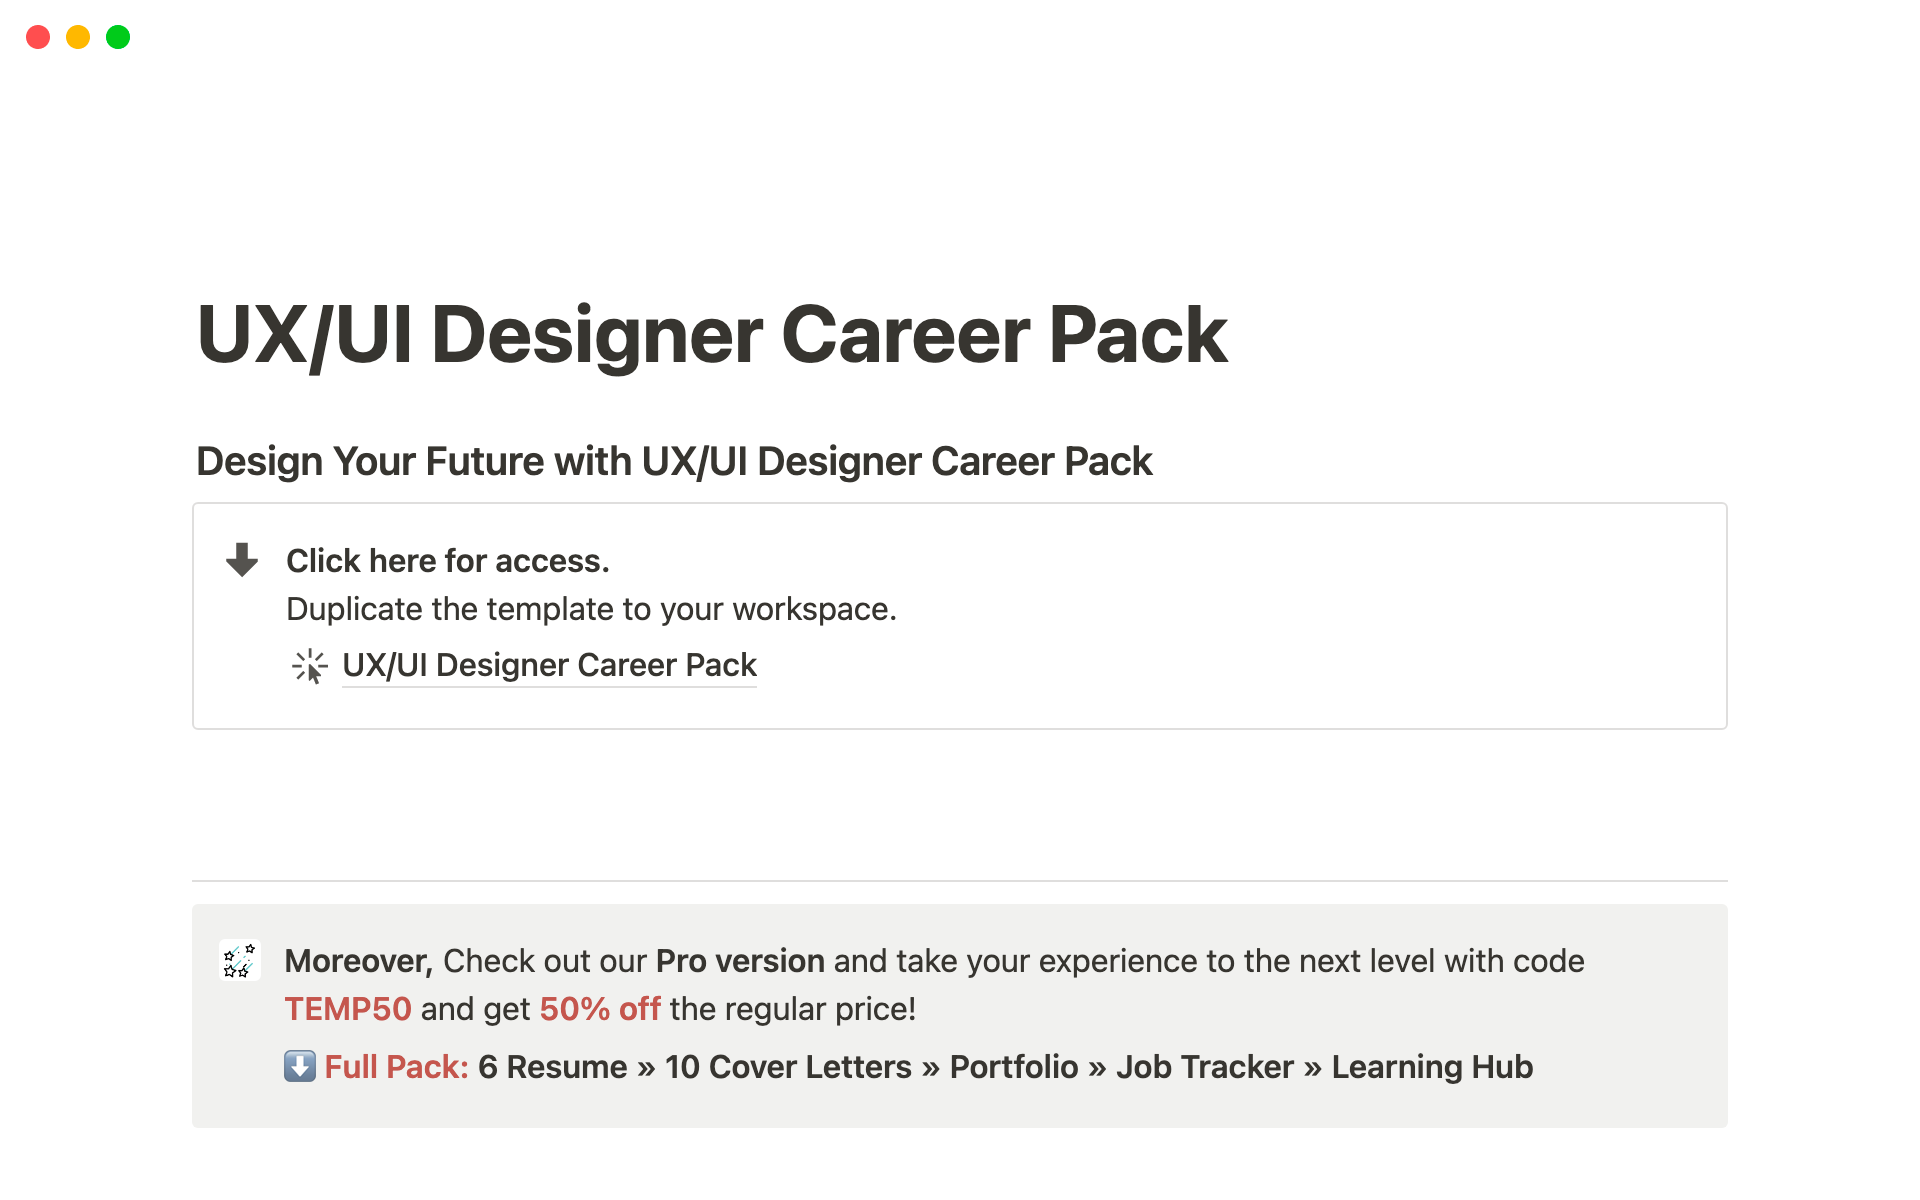 Aperçu du modèle de UX/UI Designer Career Pack